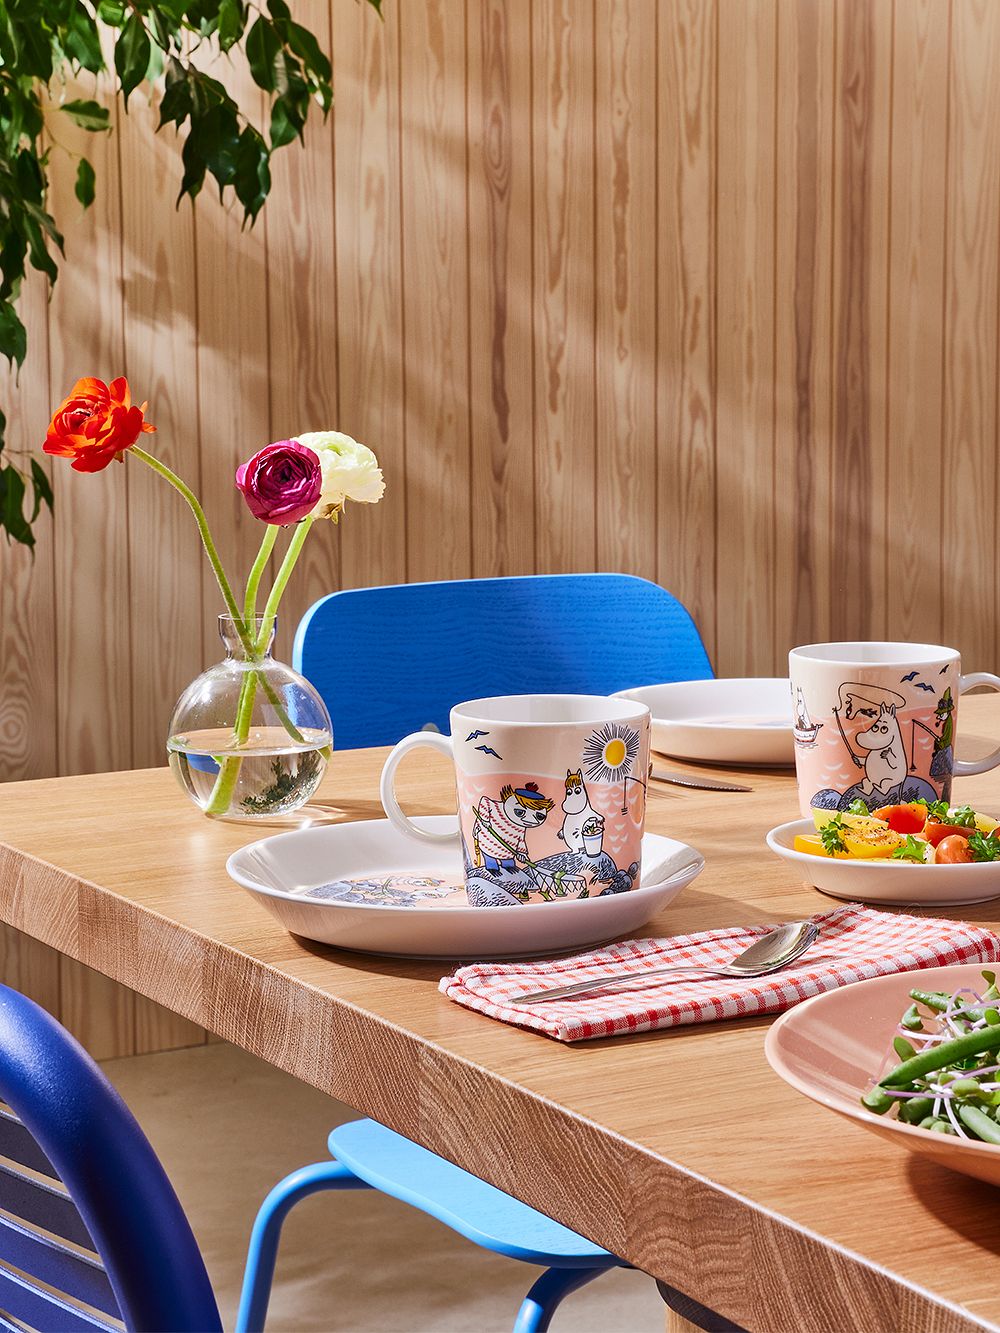 Table setting with Arabia's Moomin summer set 2022, Fishing